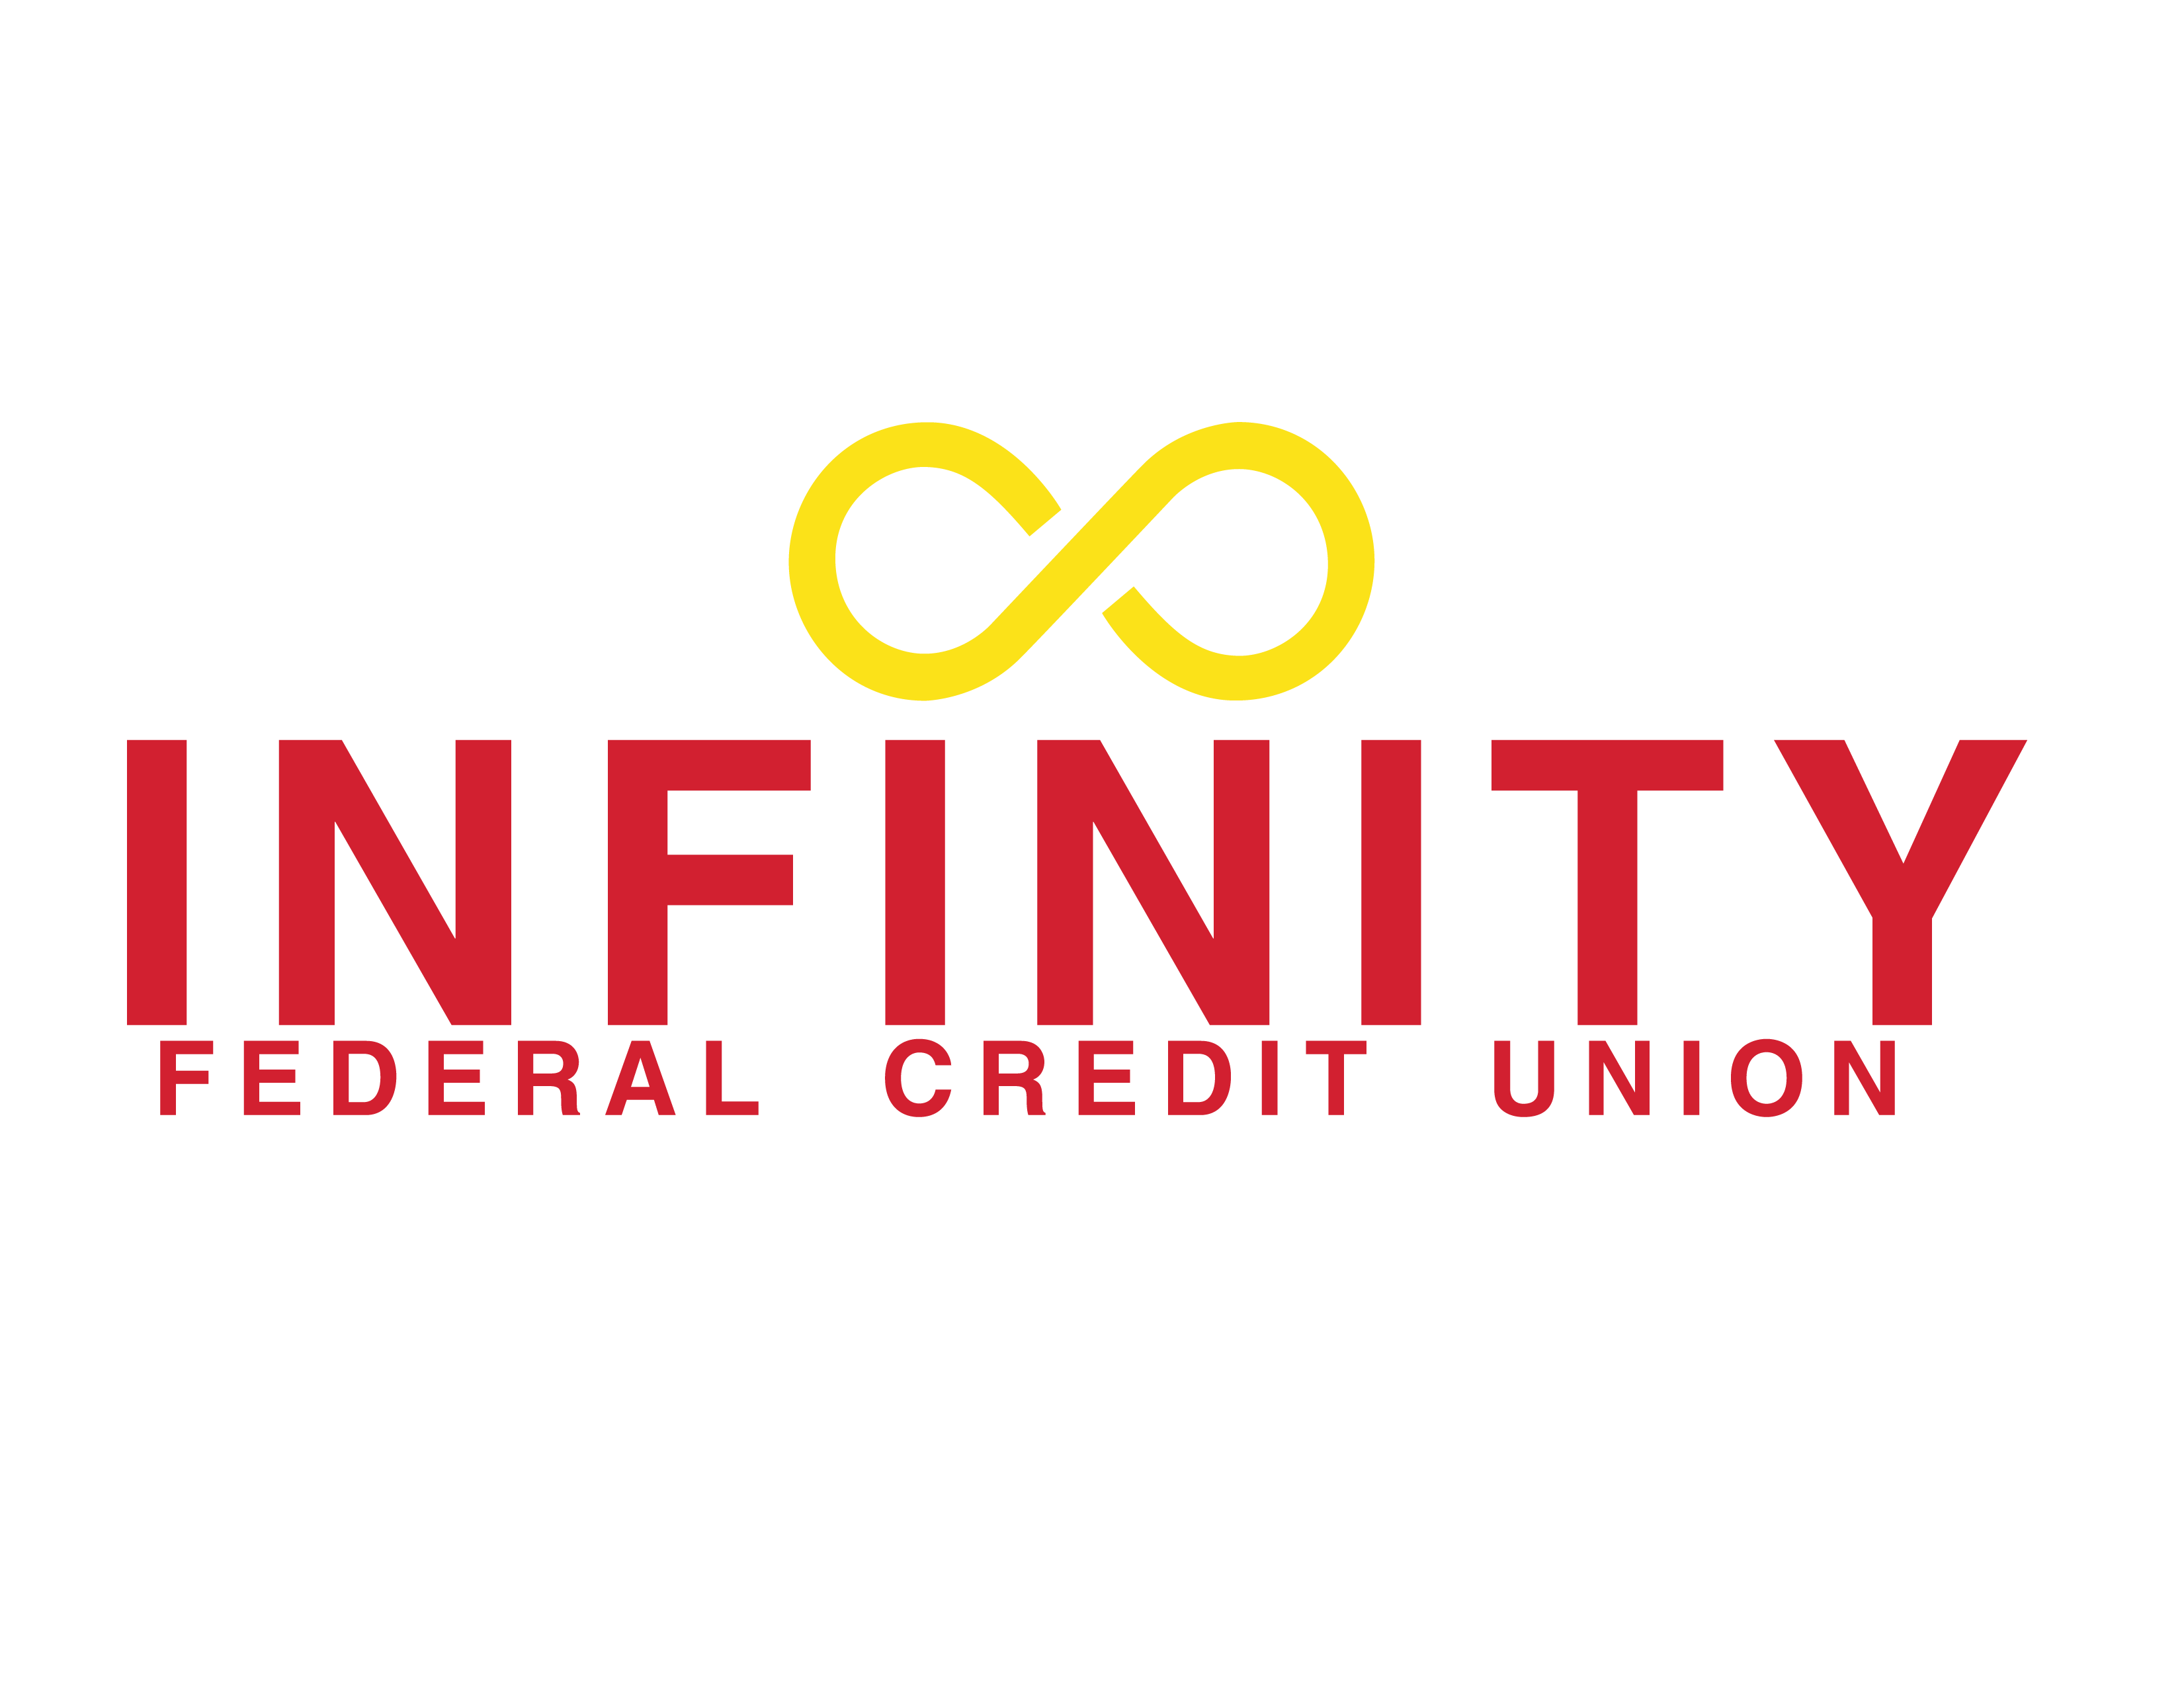 Infinity Federal Credit Union (FCU)